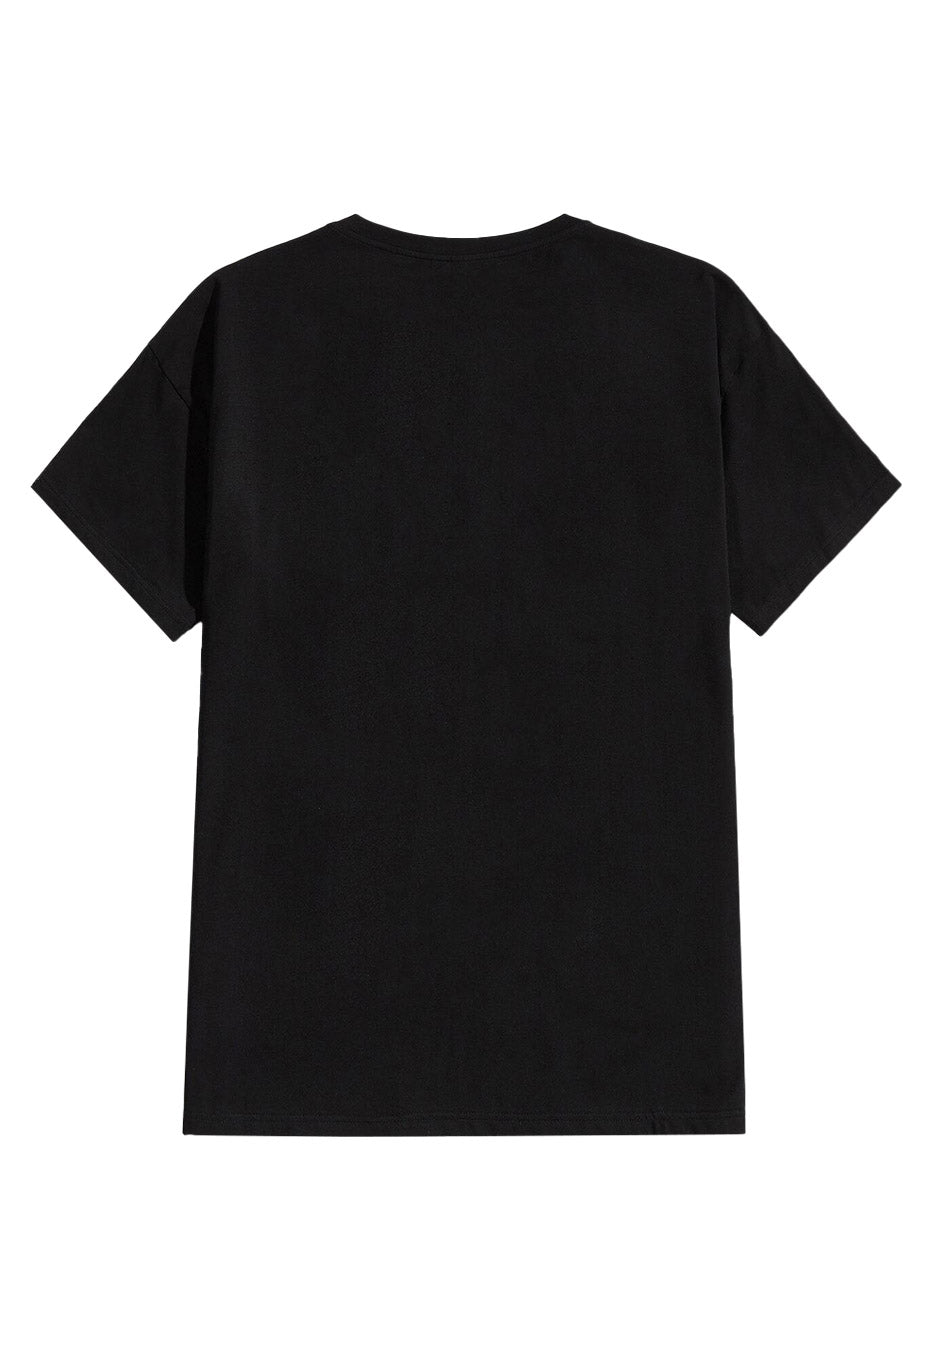 Kublai Khan - Low Tech - T-Shirt | Neutral-Image